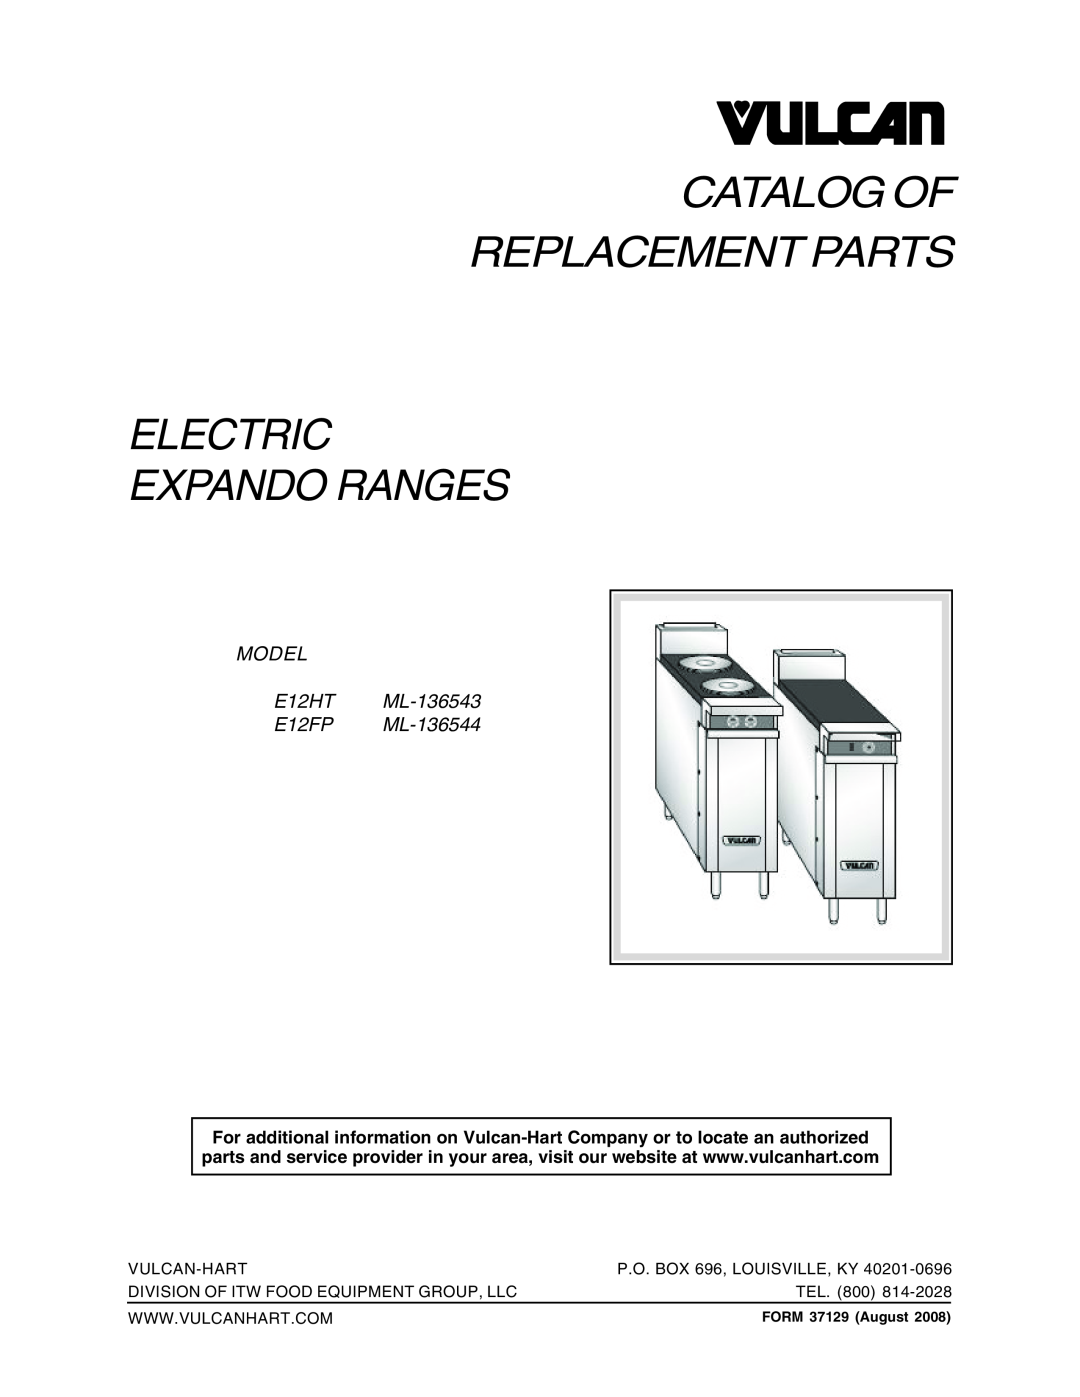 Vulcan-Hart E12FP, E12HT manual FORM 37129 August, Catalog Of Replacement Parts Electric, Expando Ranges, Vulcan-Hart, Tel 